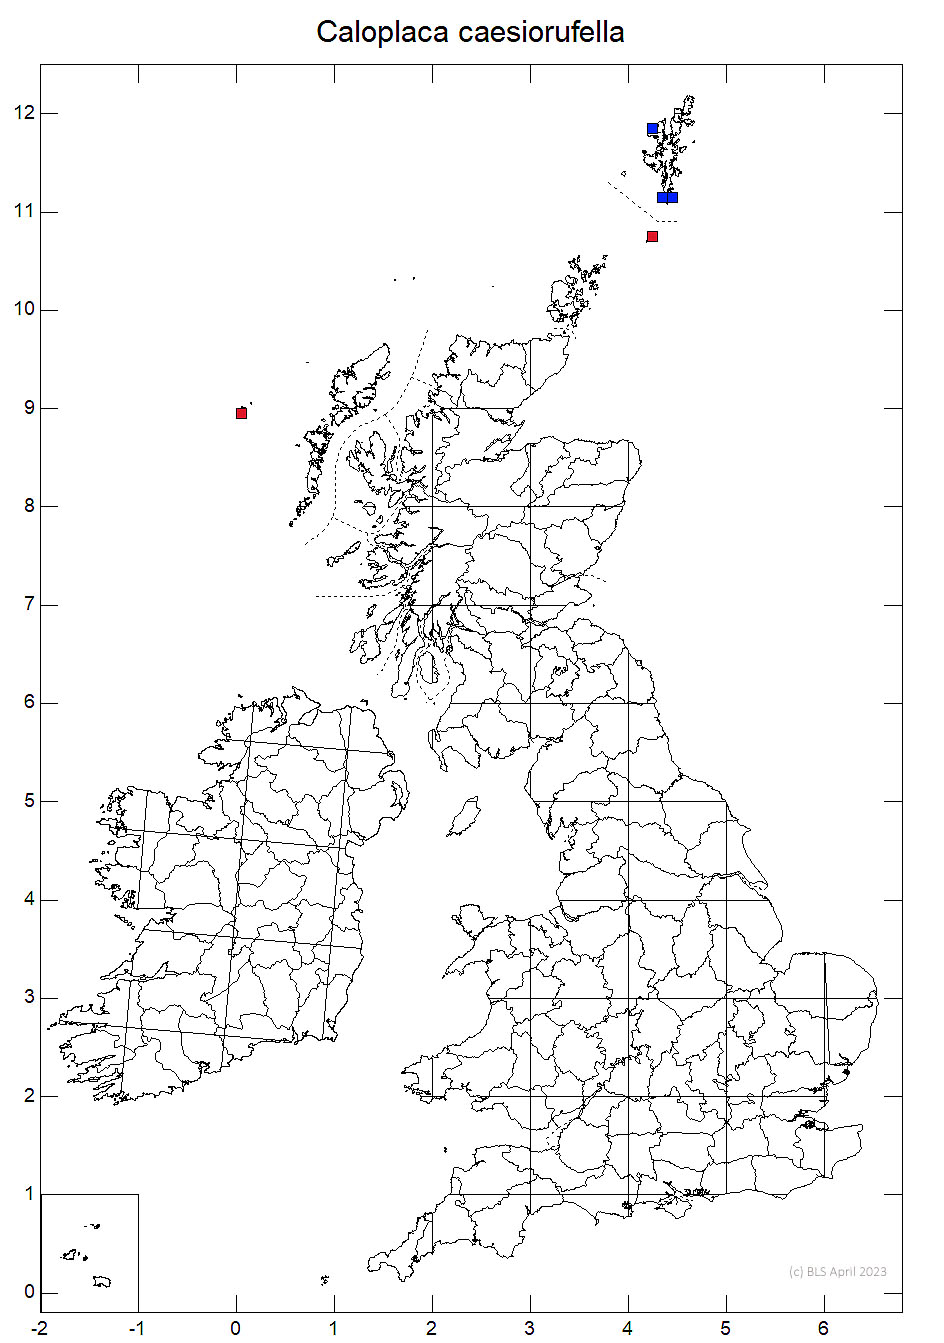 Caloplaca caesiorufella 10km sq distribution map